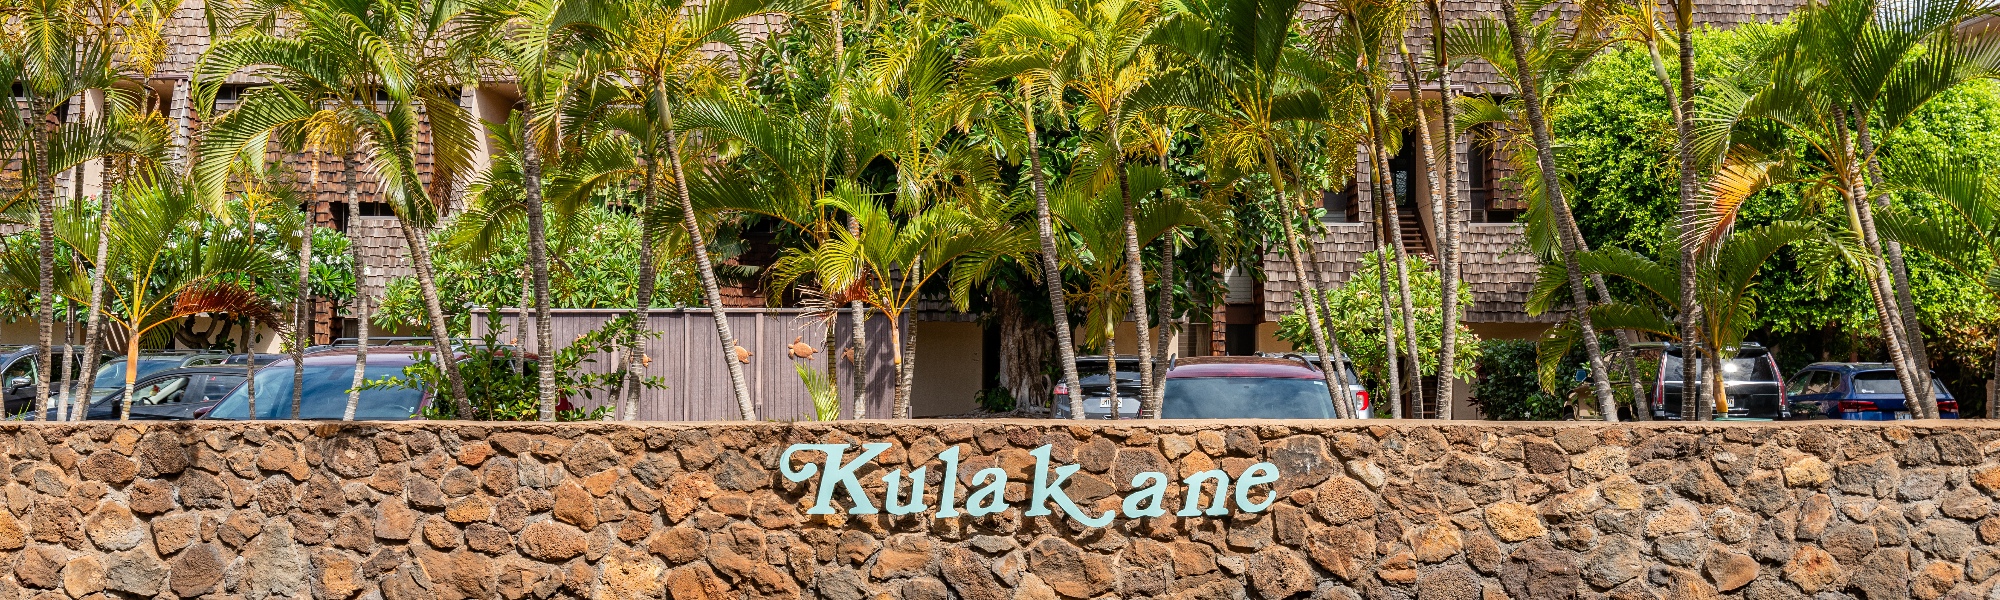 West Maui Vacation Rentals